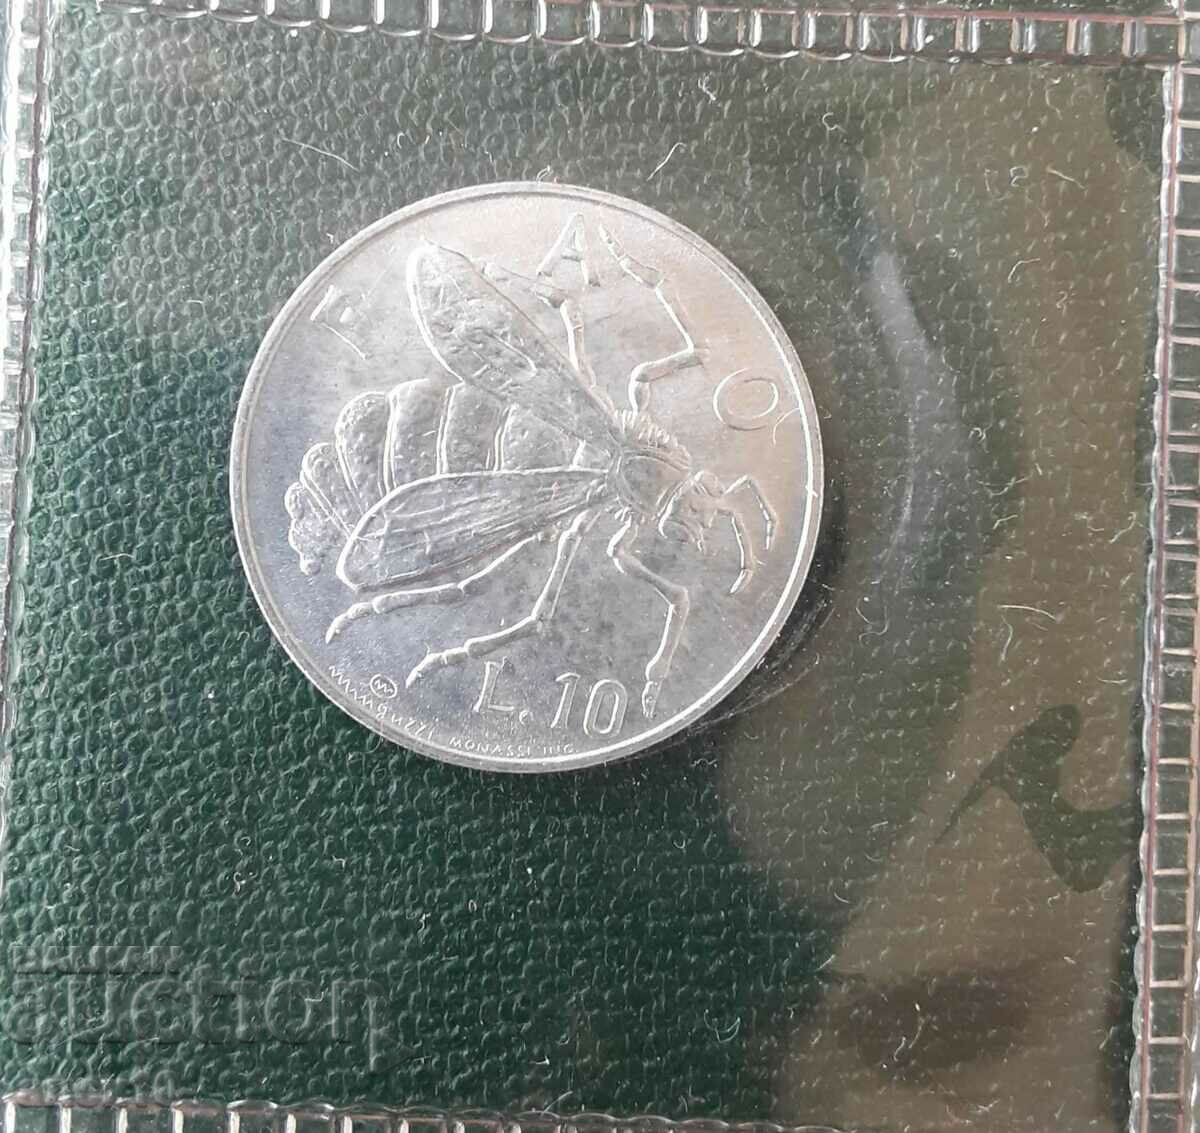 San Marino 10 lire 1974